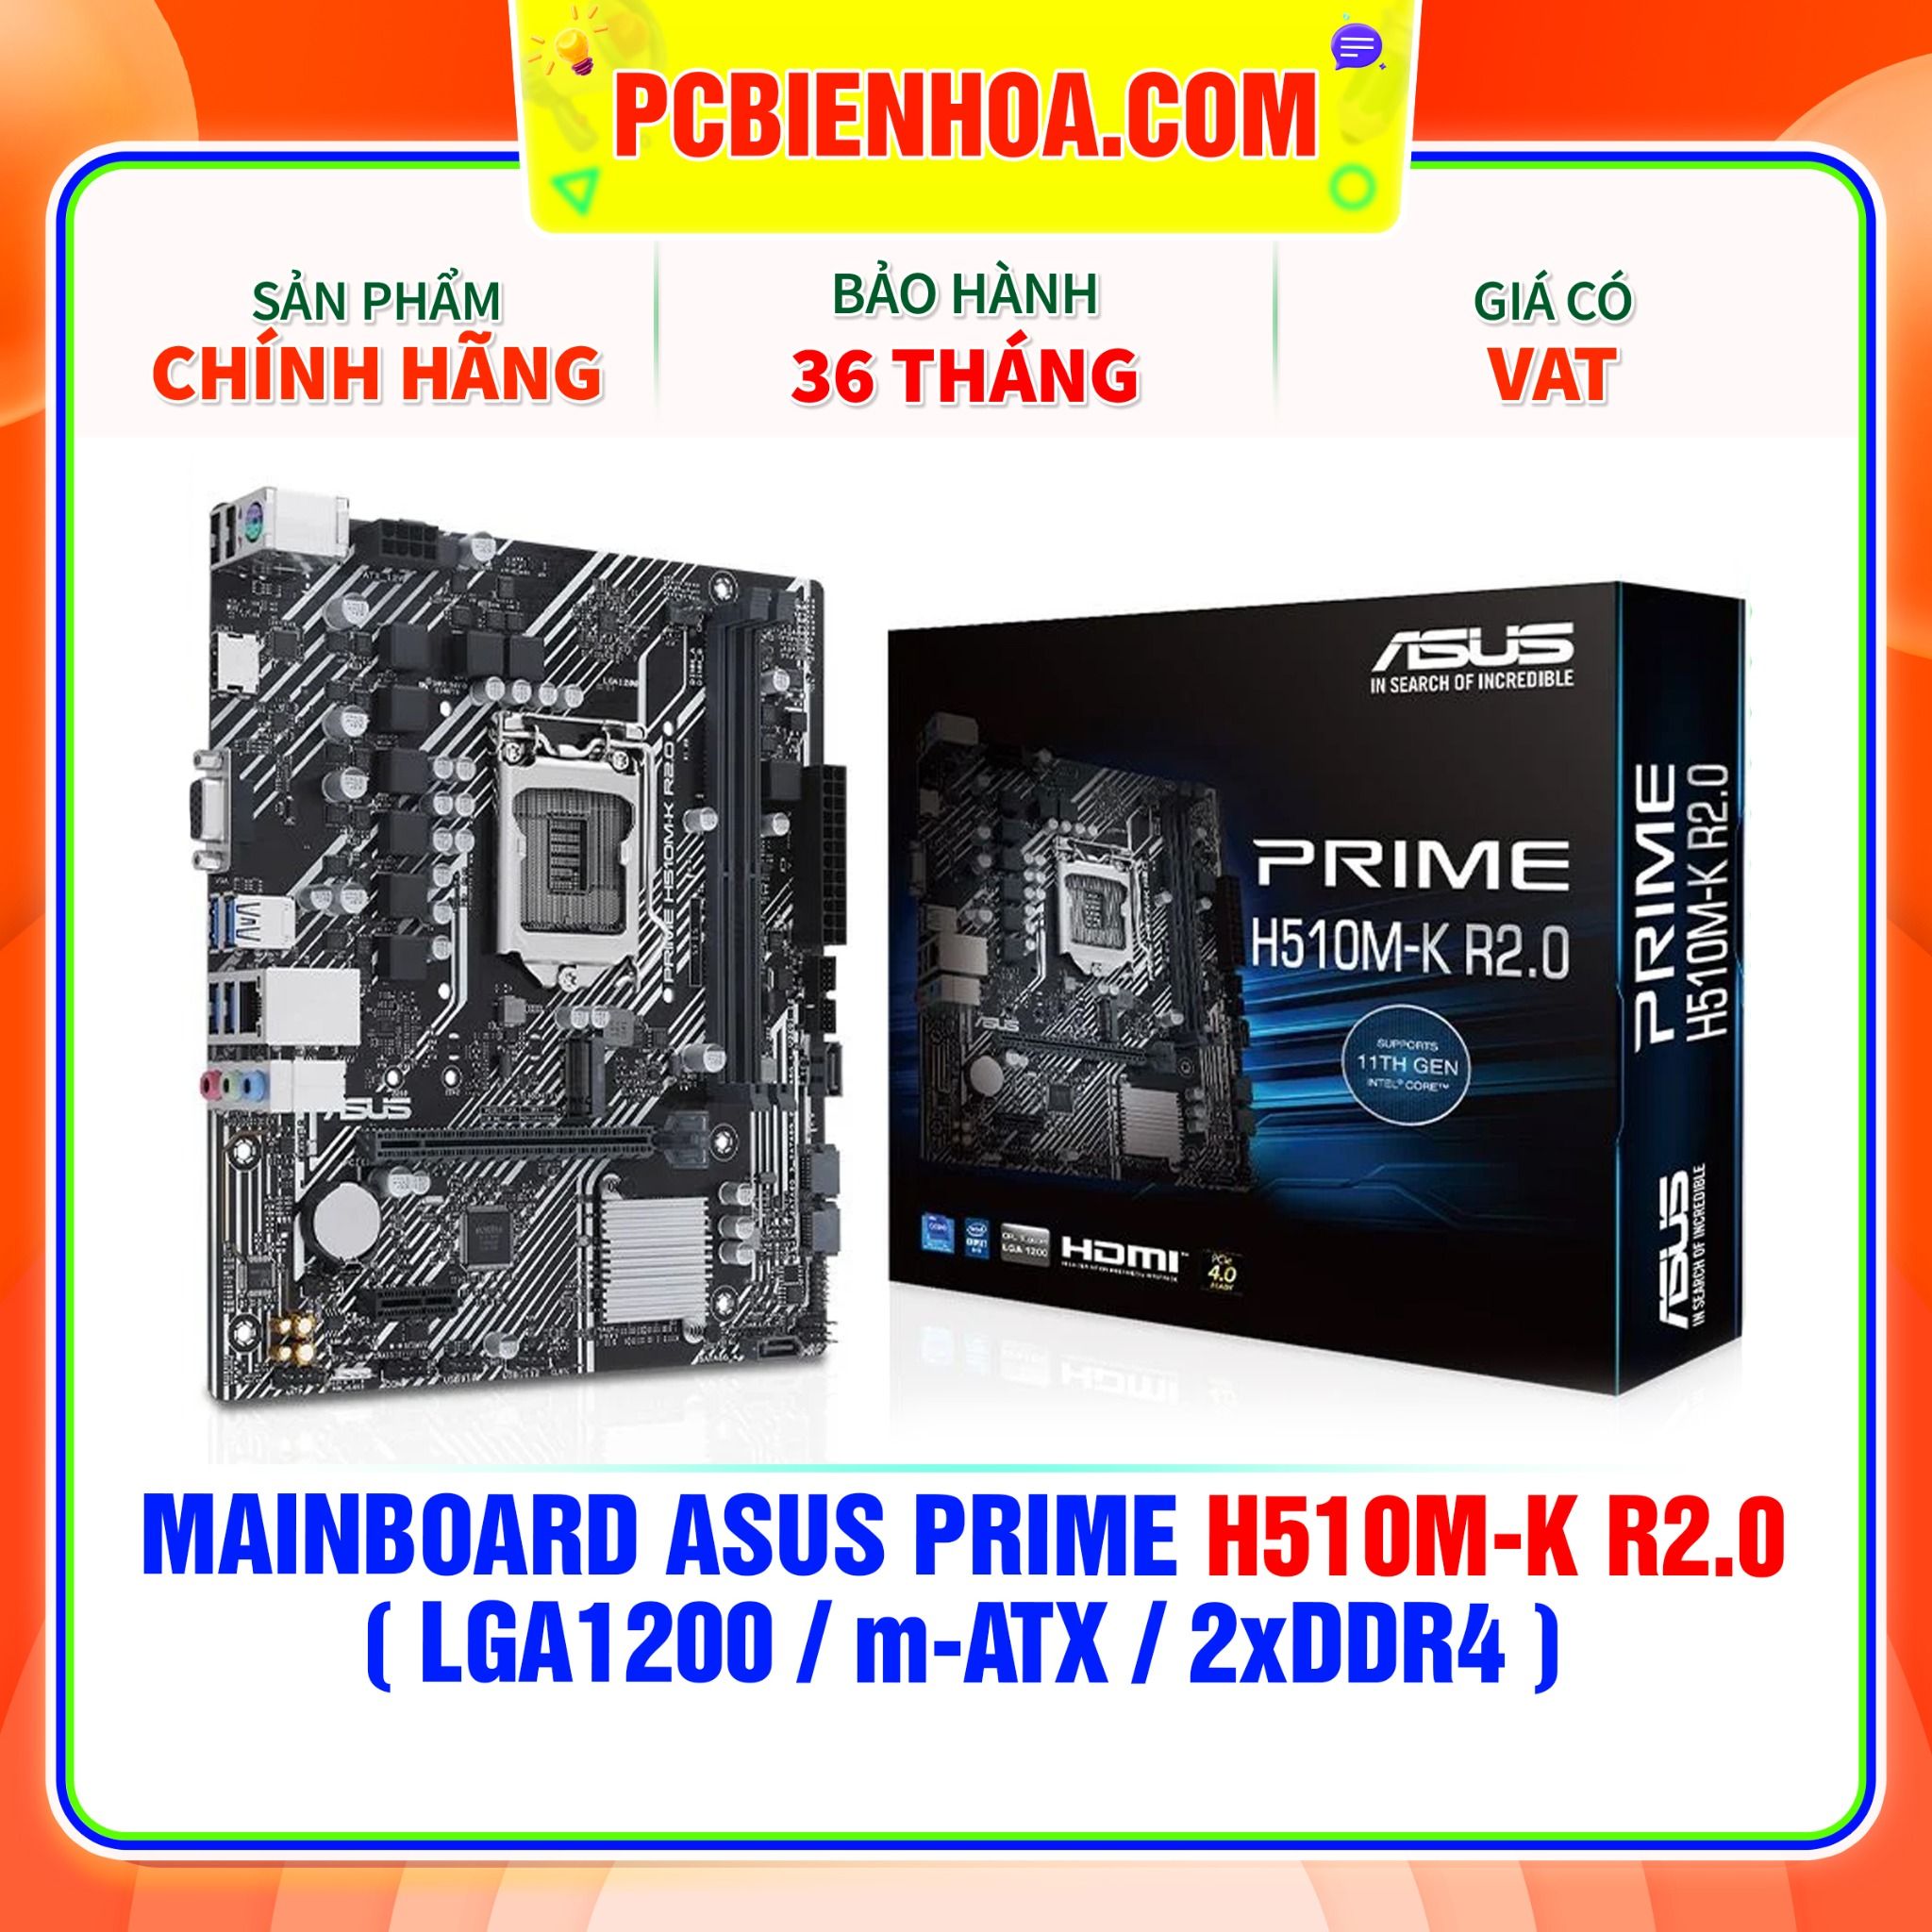  MAINBOARD ASUS PRIME H510M-K R2.0 ( LGA1200 / m-ATX / 2xDDR4 ) 